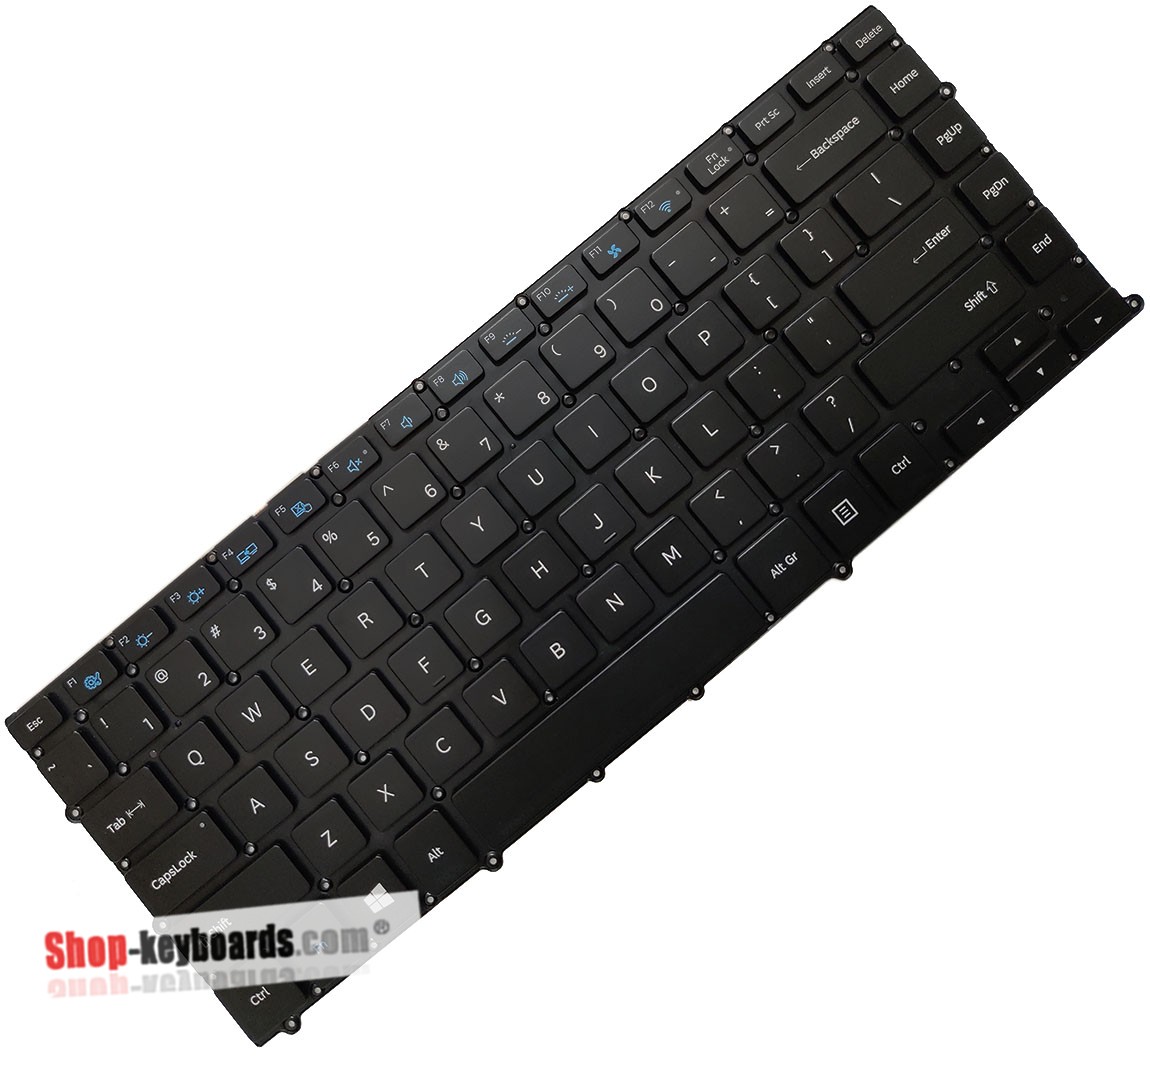 Samsung NP900X4B Keyboard replacement